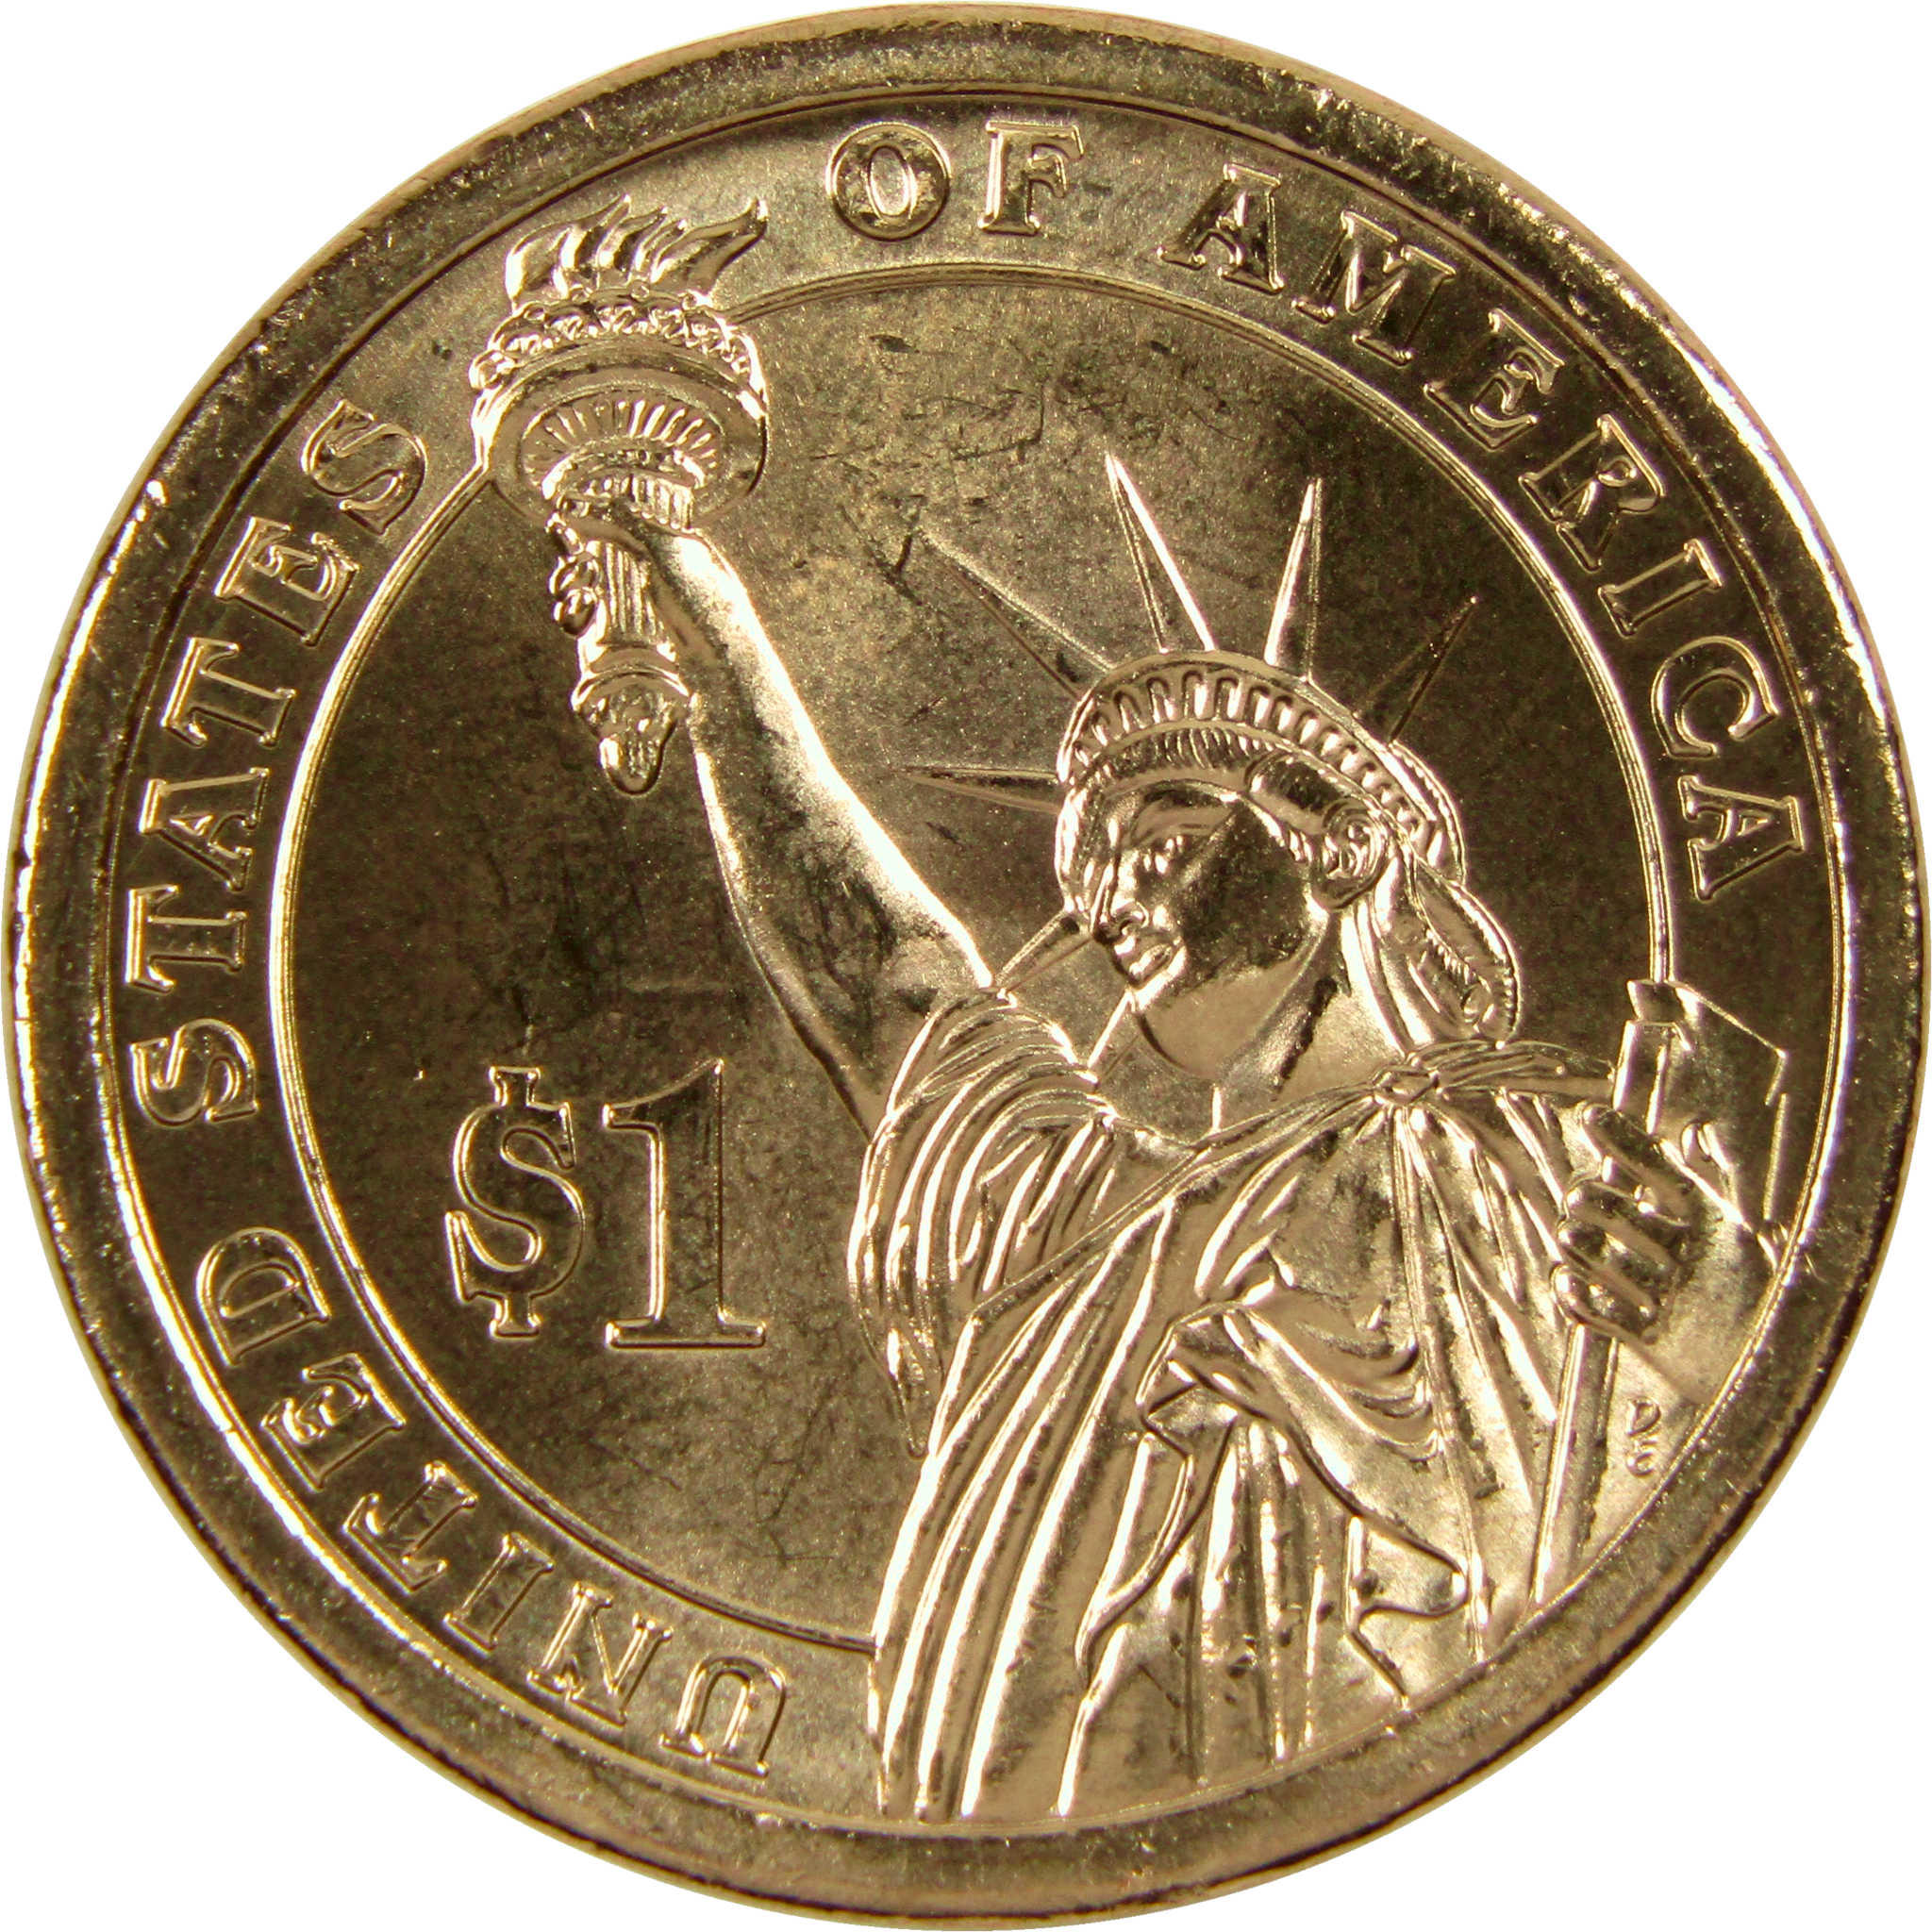 2009 P Zachary Taylor Presidential Dollar BU Uncirculated $1 Coin